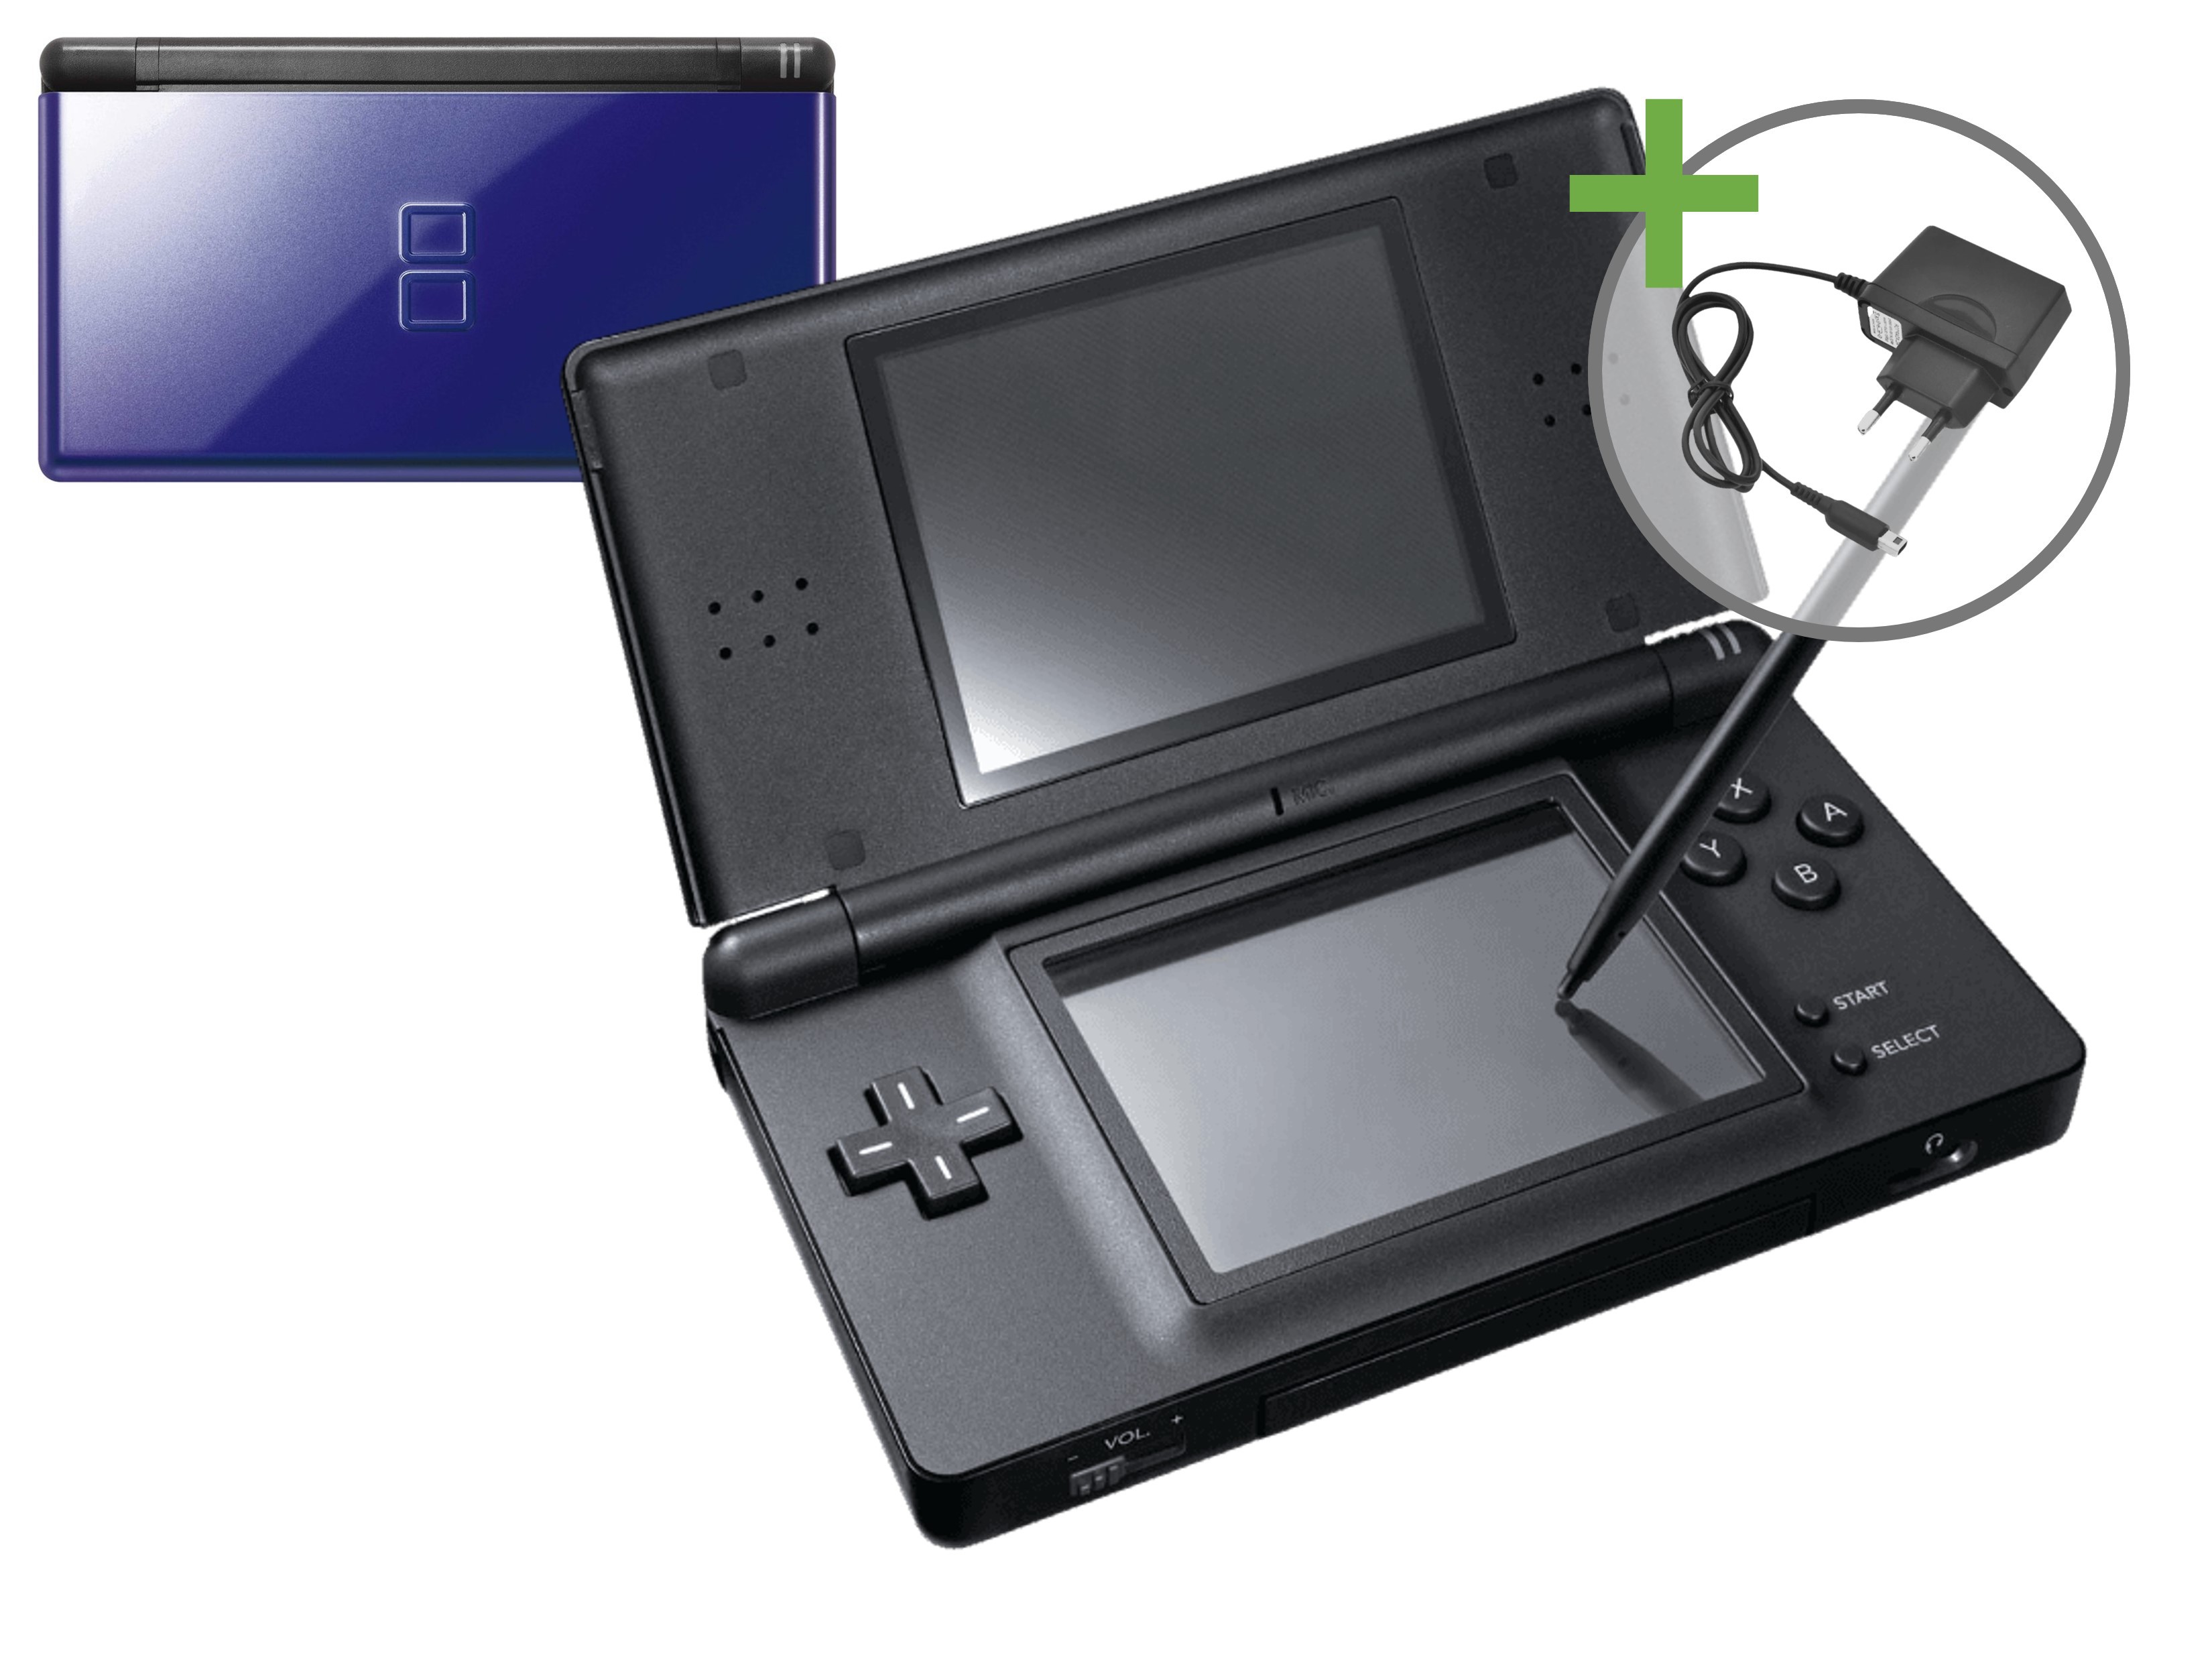 Nintendo DS Lite - Black/Blue [Complete] - Nintendo DS Hardware - 2